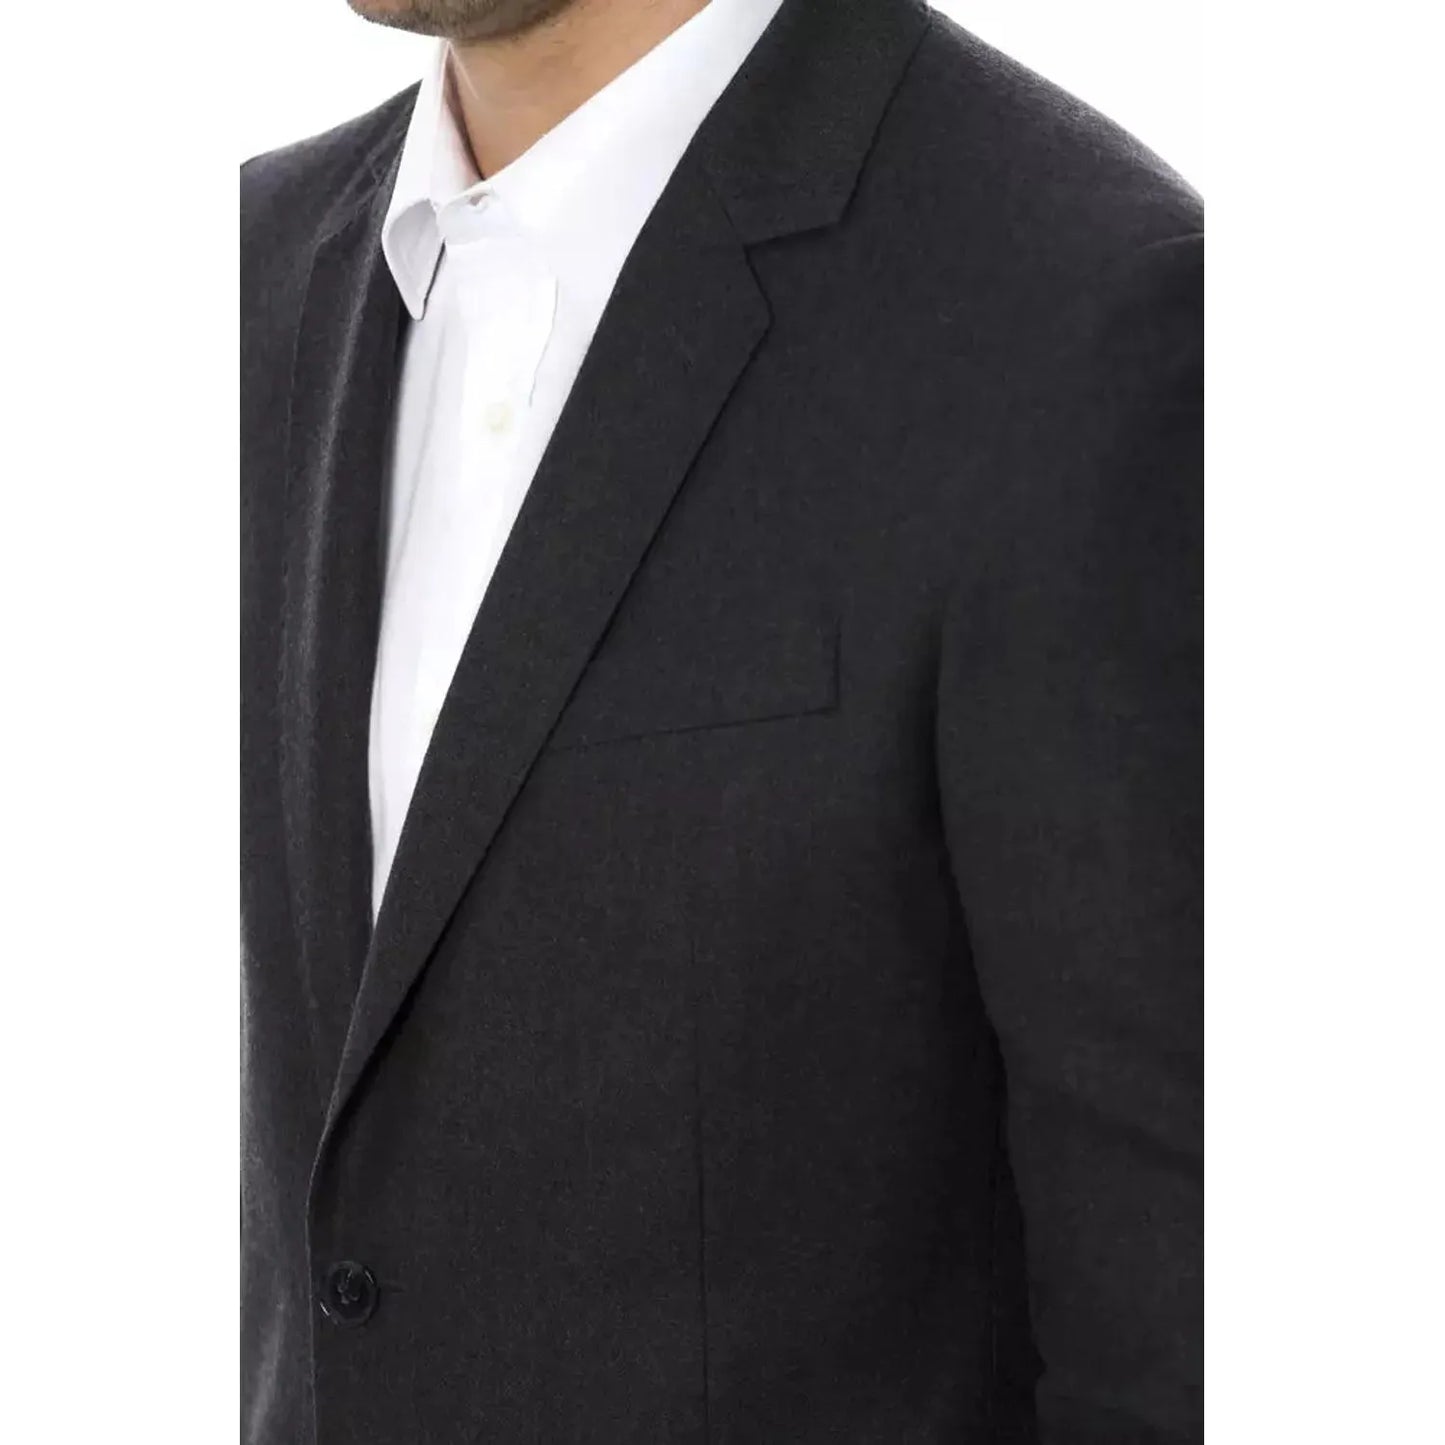 Verri Elegant Gray Wool Men's Blazer vgrigiochiaro-blazer stock_product_image_18297_630680384-16-93e394c8-aa6.webp